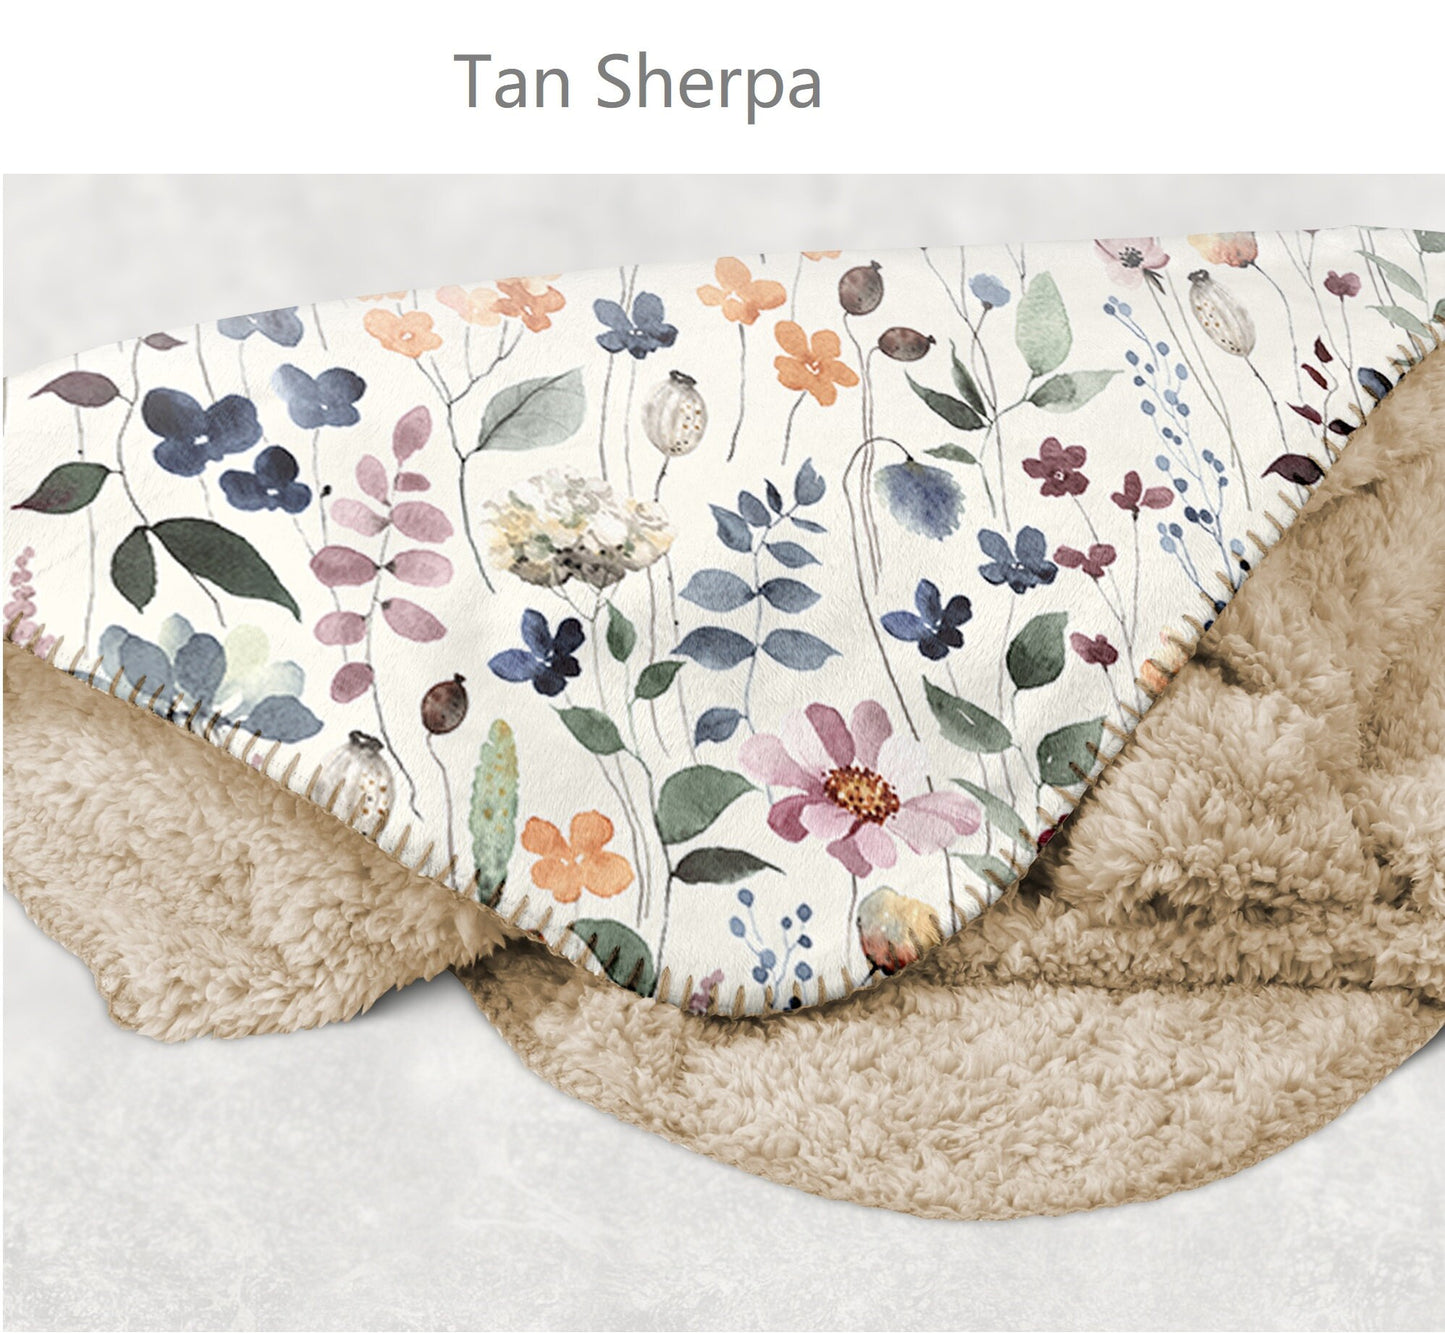 Retro Rainbow personalize blanket, Minky or Sherpa custom blanket, Baby blanket, birthday gift idea